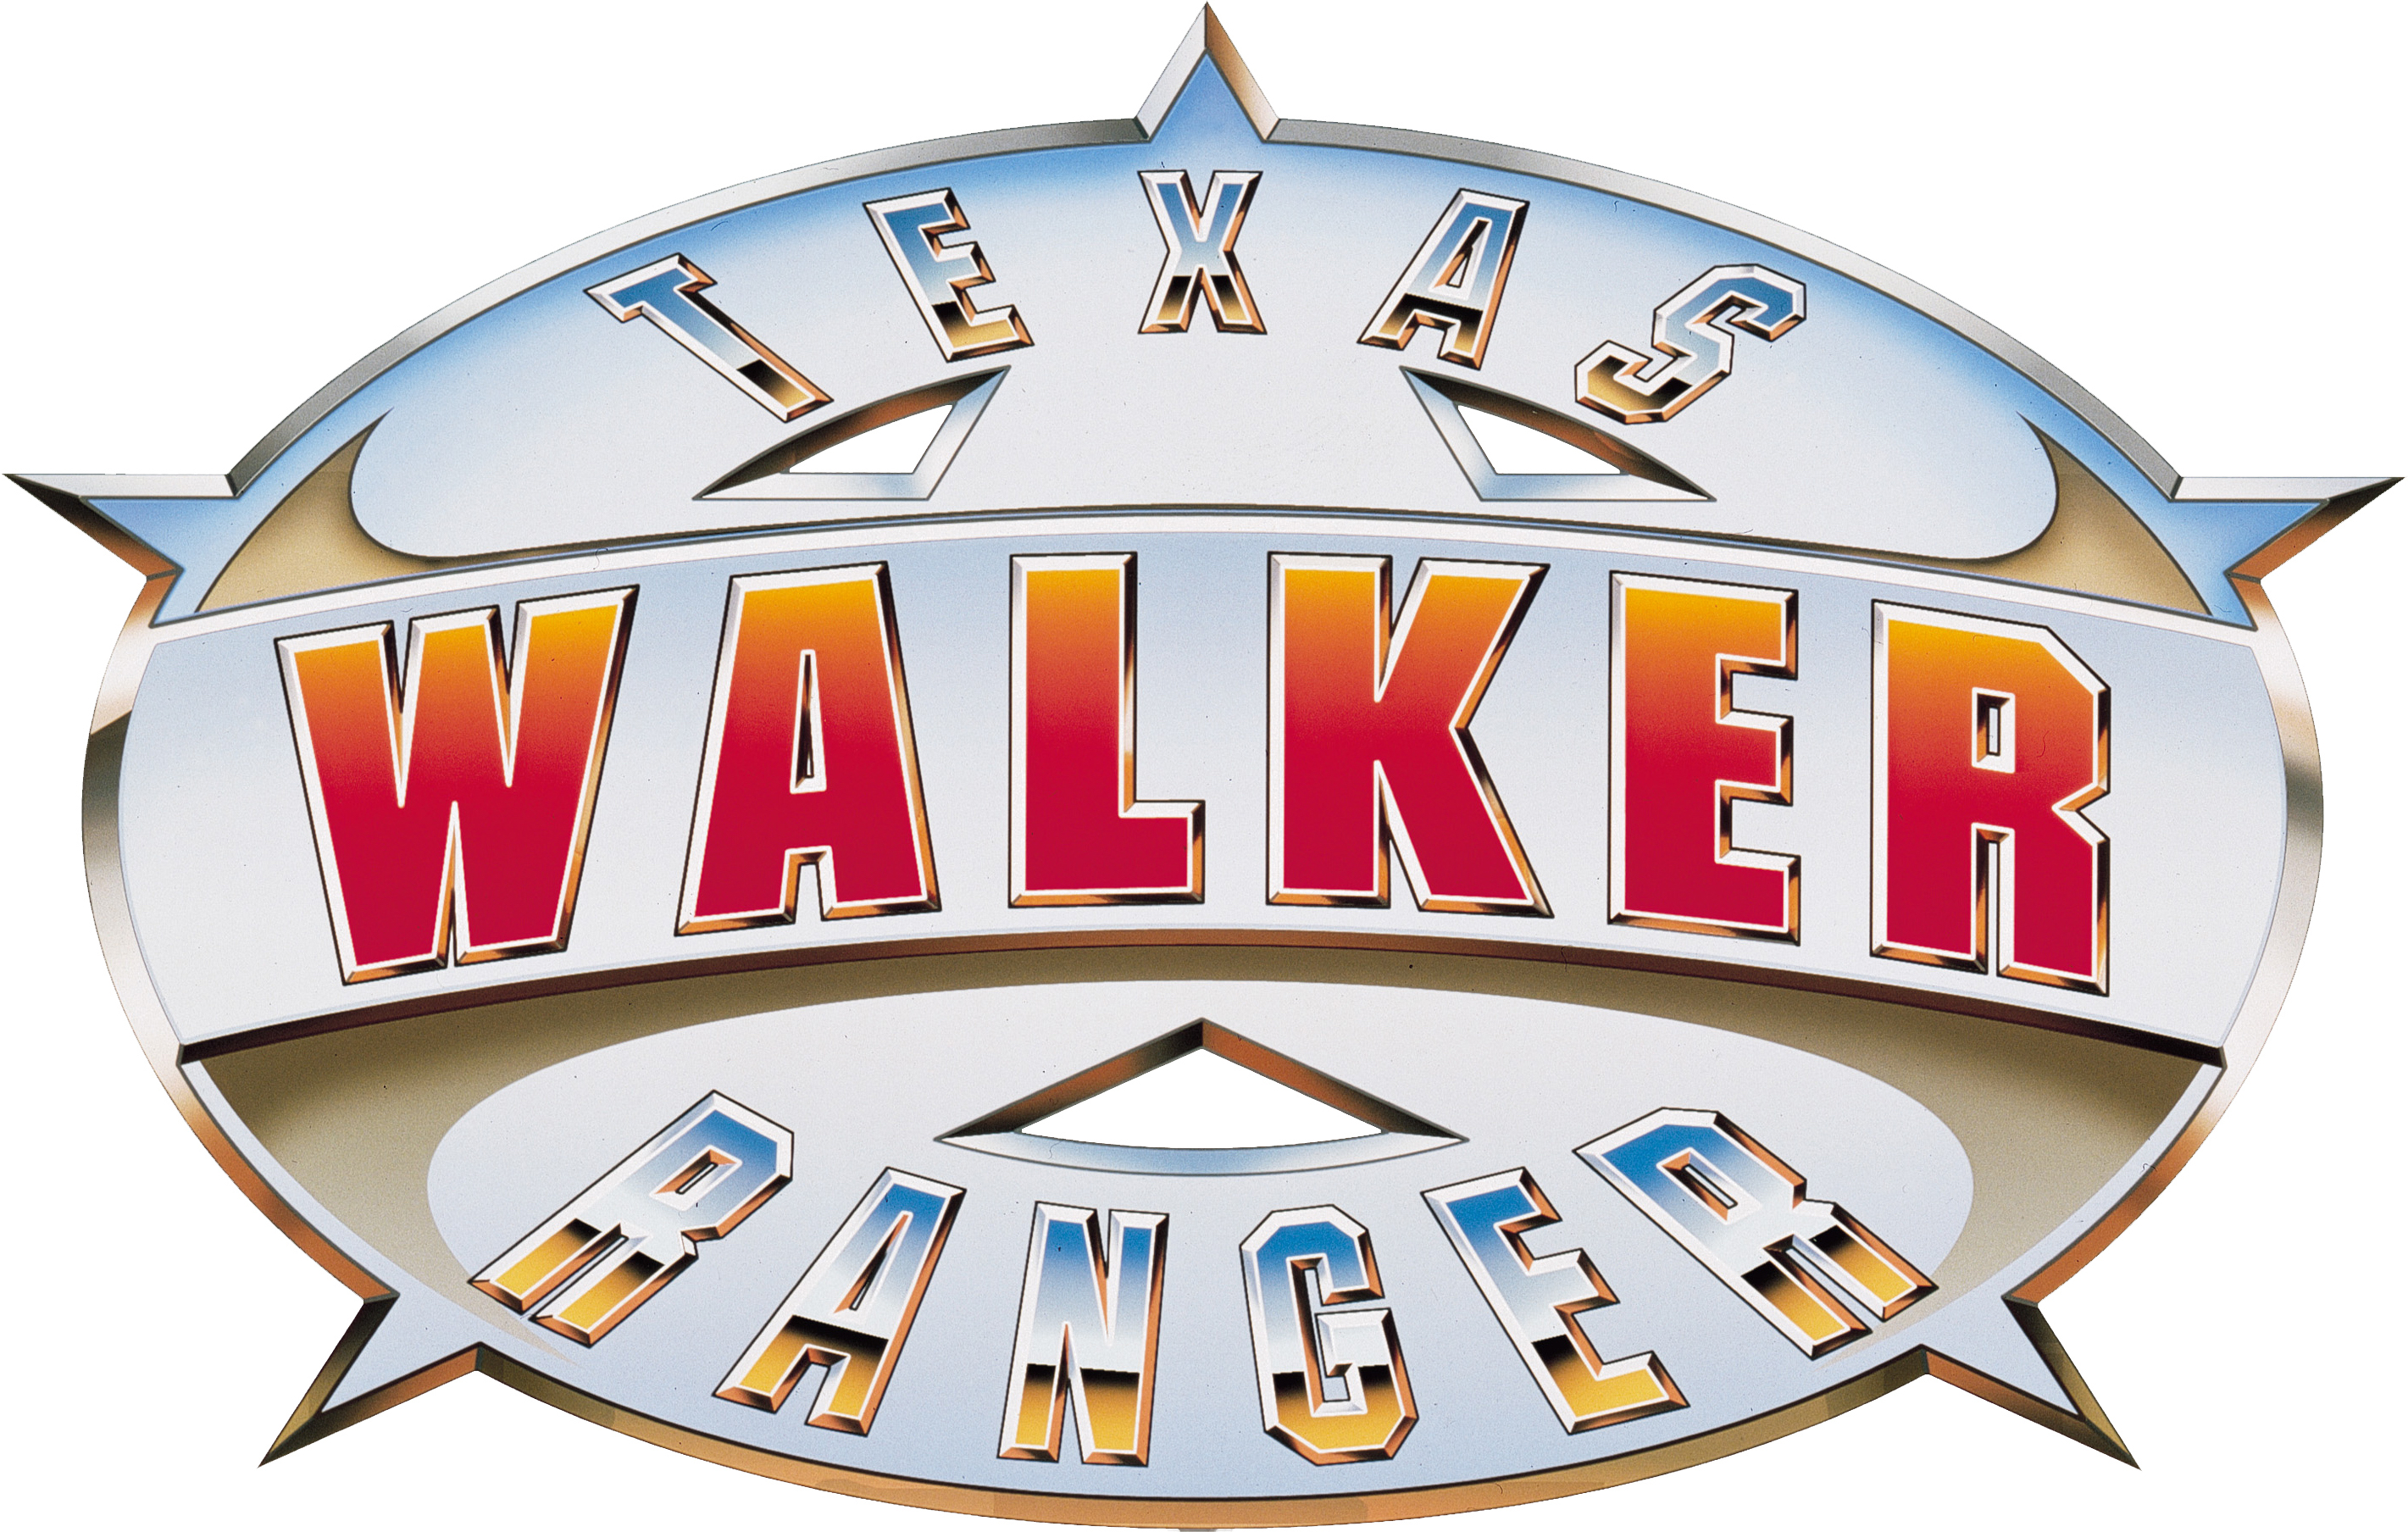 Texas Rangers, Walkerpedia